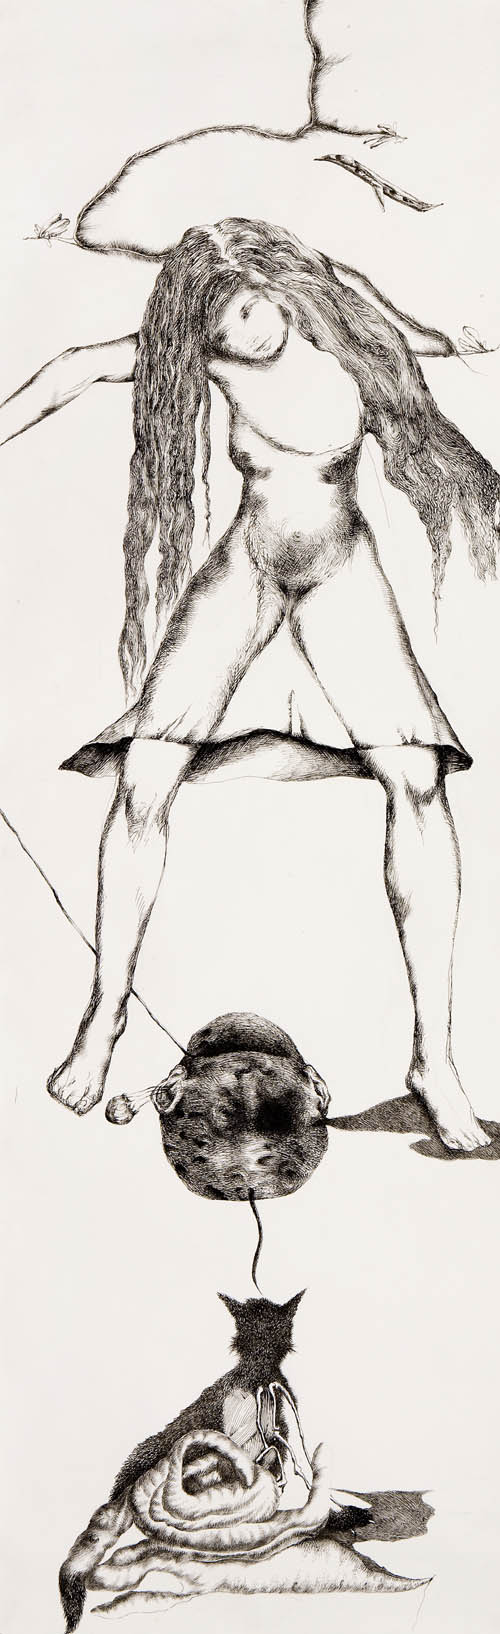 Nino Japaridze | La robe et la chatte (The Dress and the Cat) - 2008 ink on paper